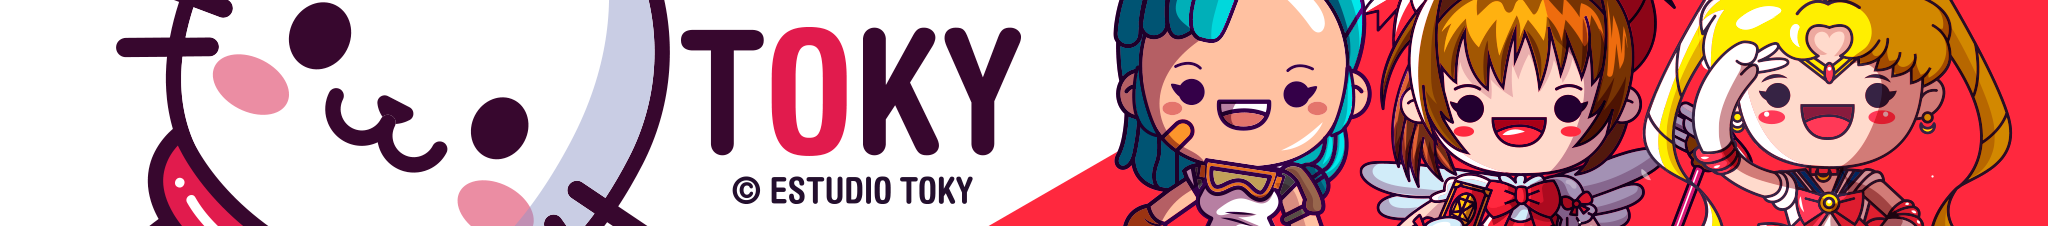 Estudio Toky's profile banner